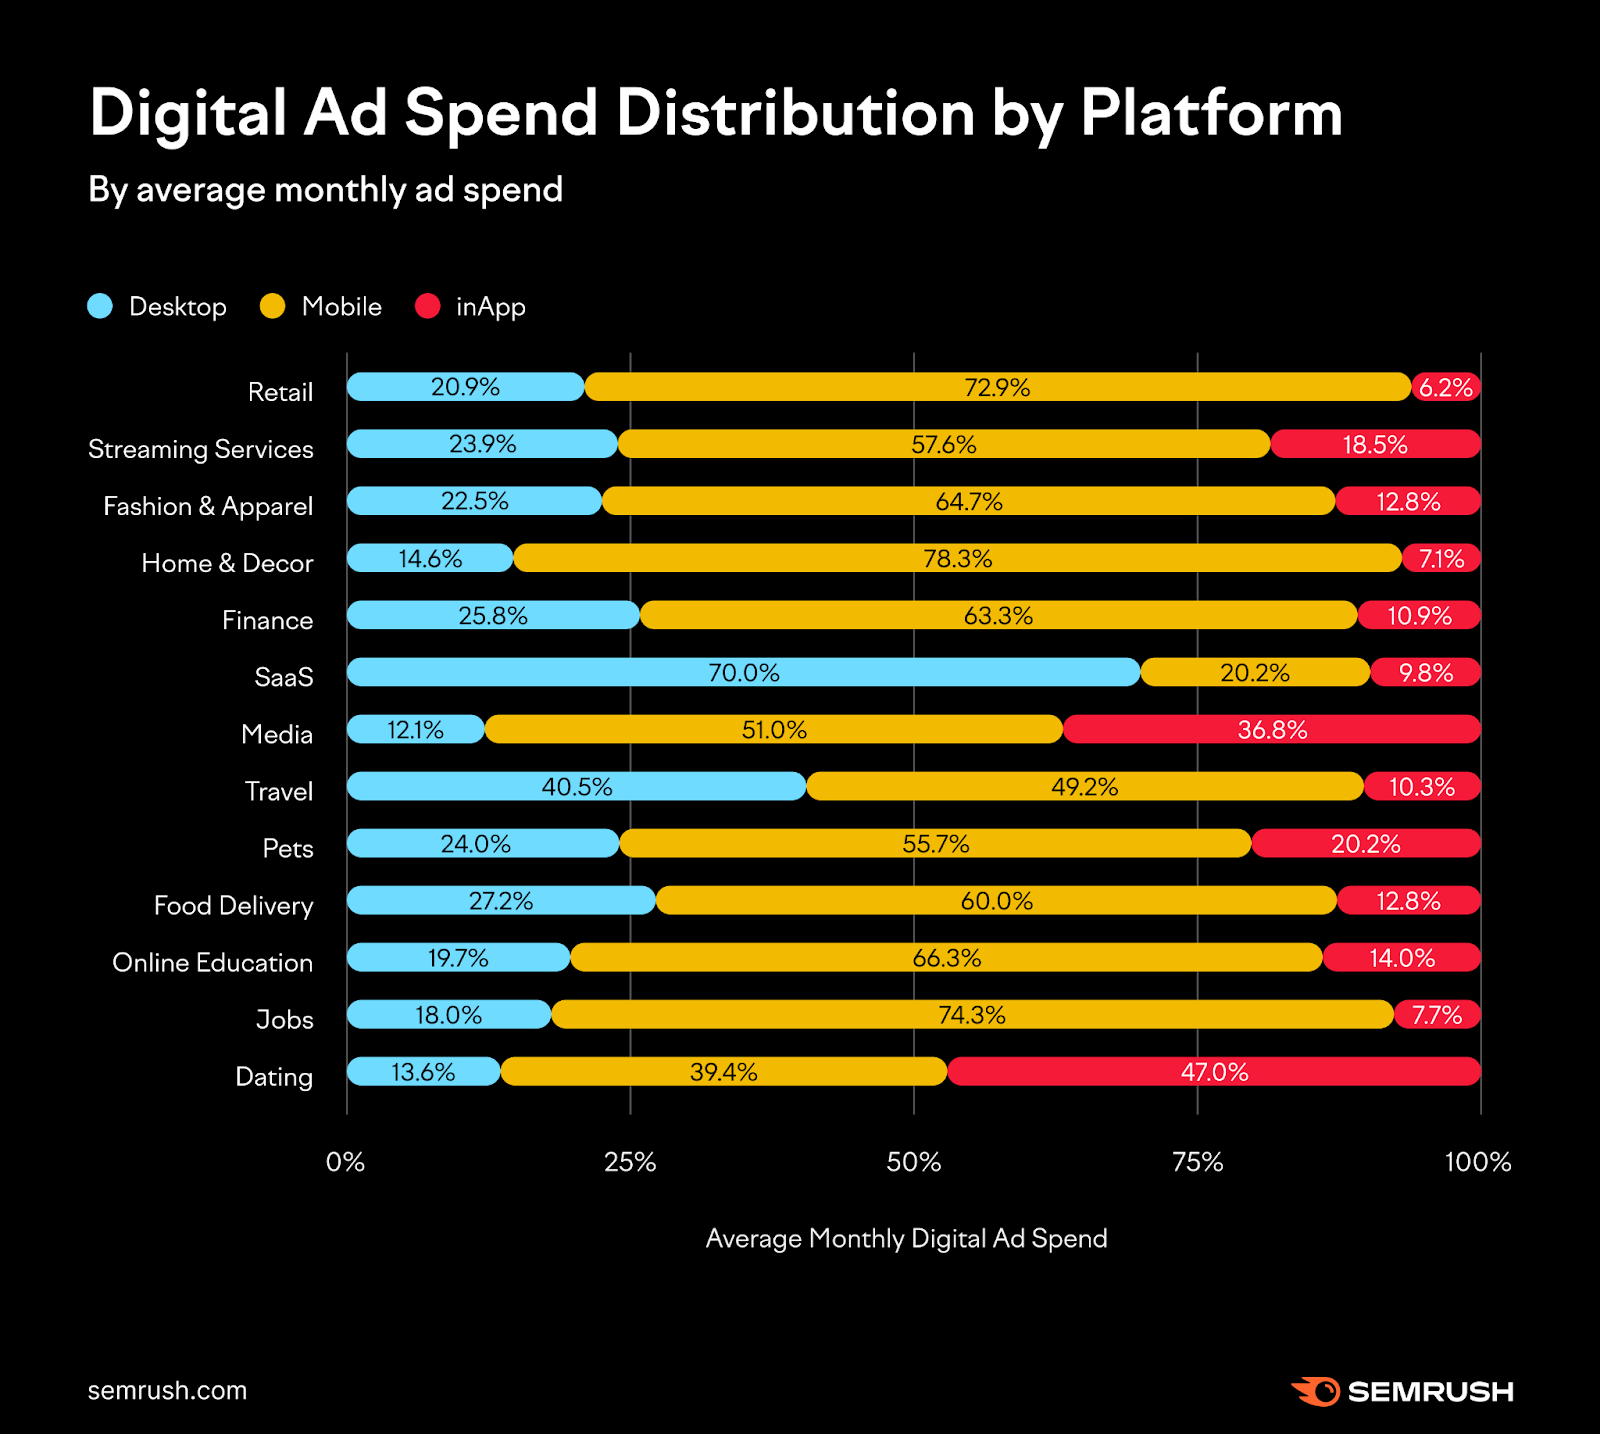 Digital ad spend distribution by platform